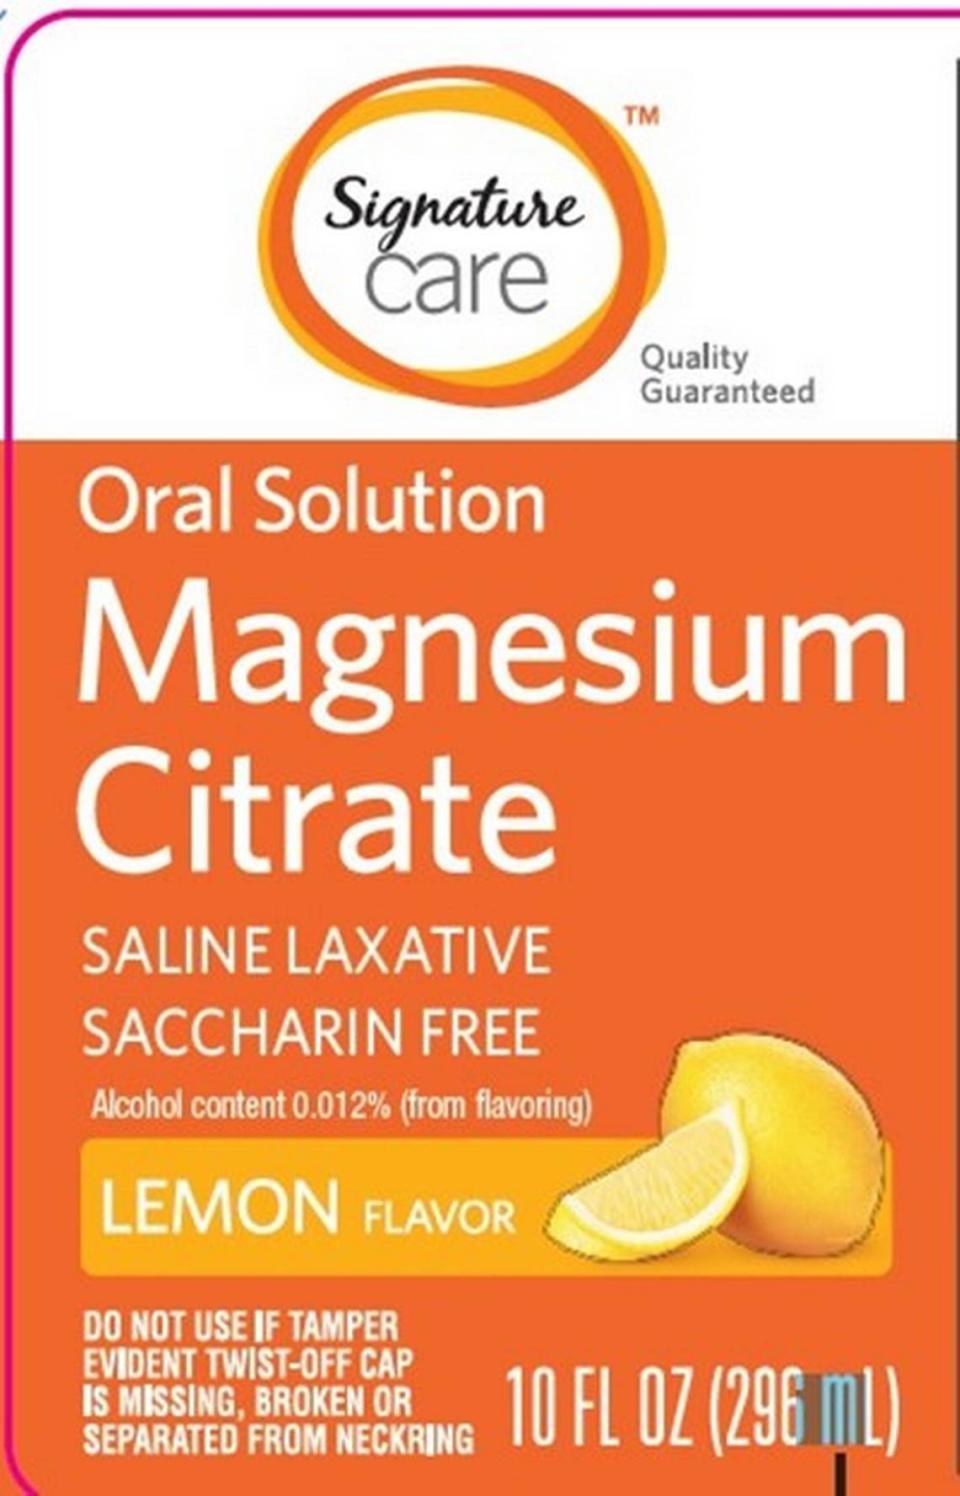 Laxante de Citrato de Magnesio salino sabor limón de Signature Care